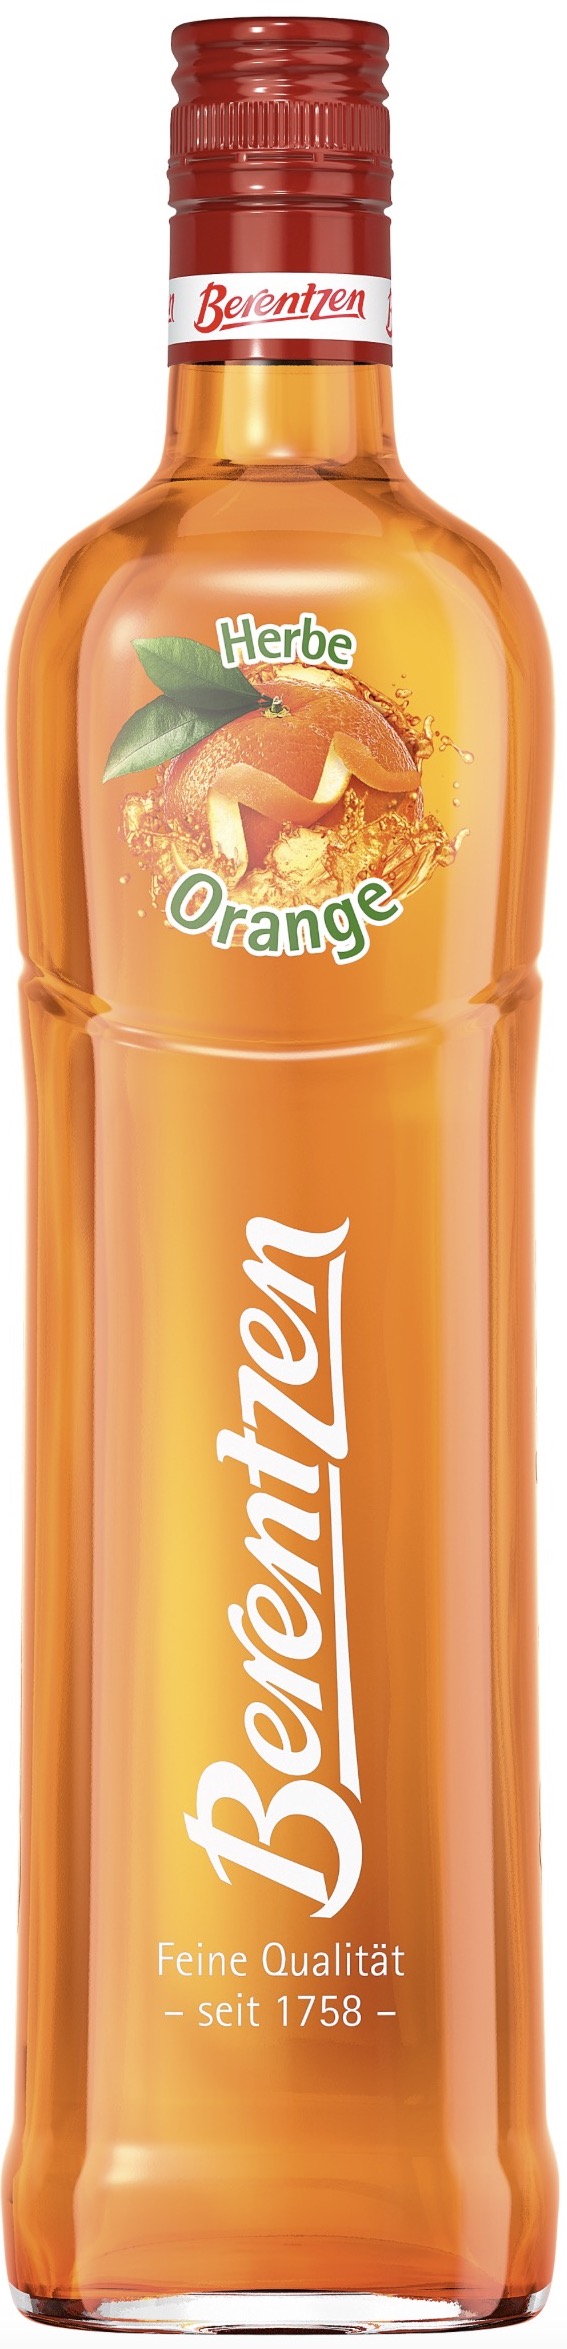 Berentzen Herbe Orange 16% vol. 0,7 l